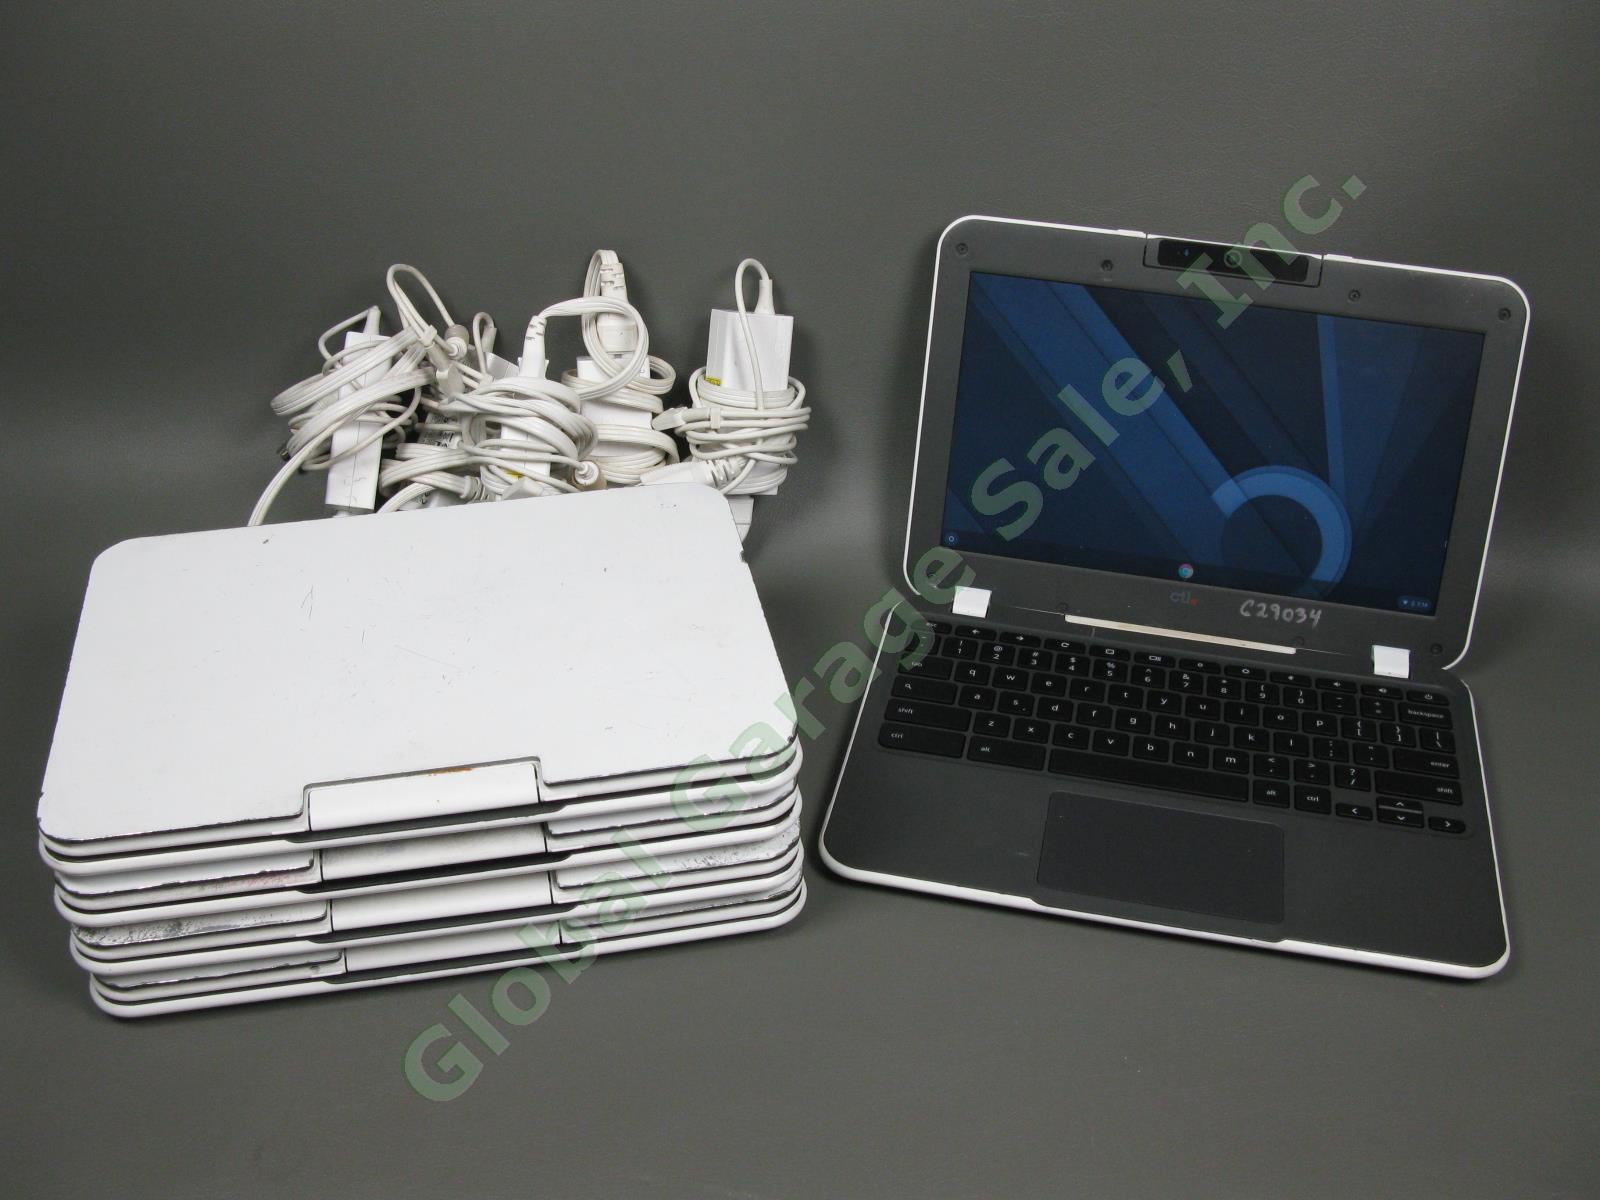 5 CTL NL6 Chromebook Notebook Laptops Lot Intel Celeron N2940 1.83GHz 4GB RAM